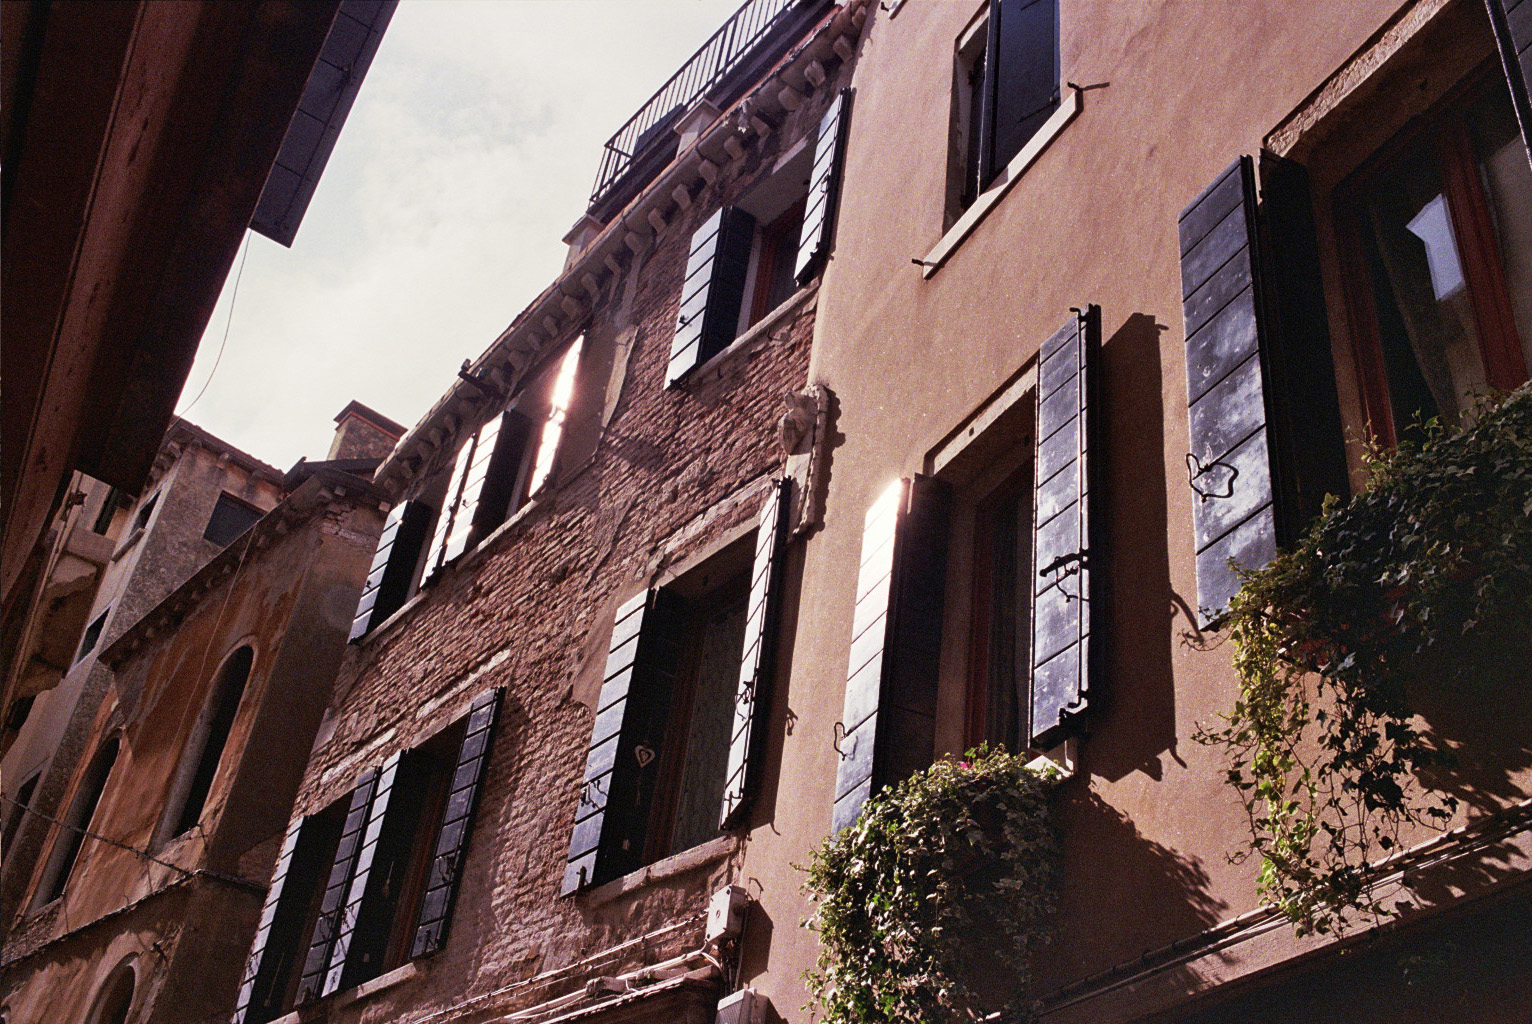 Some windows in Venice